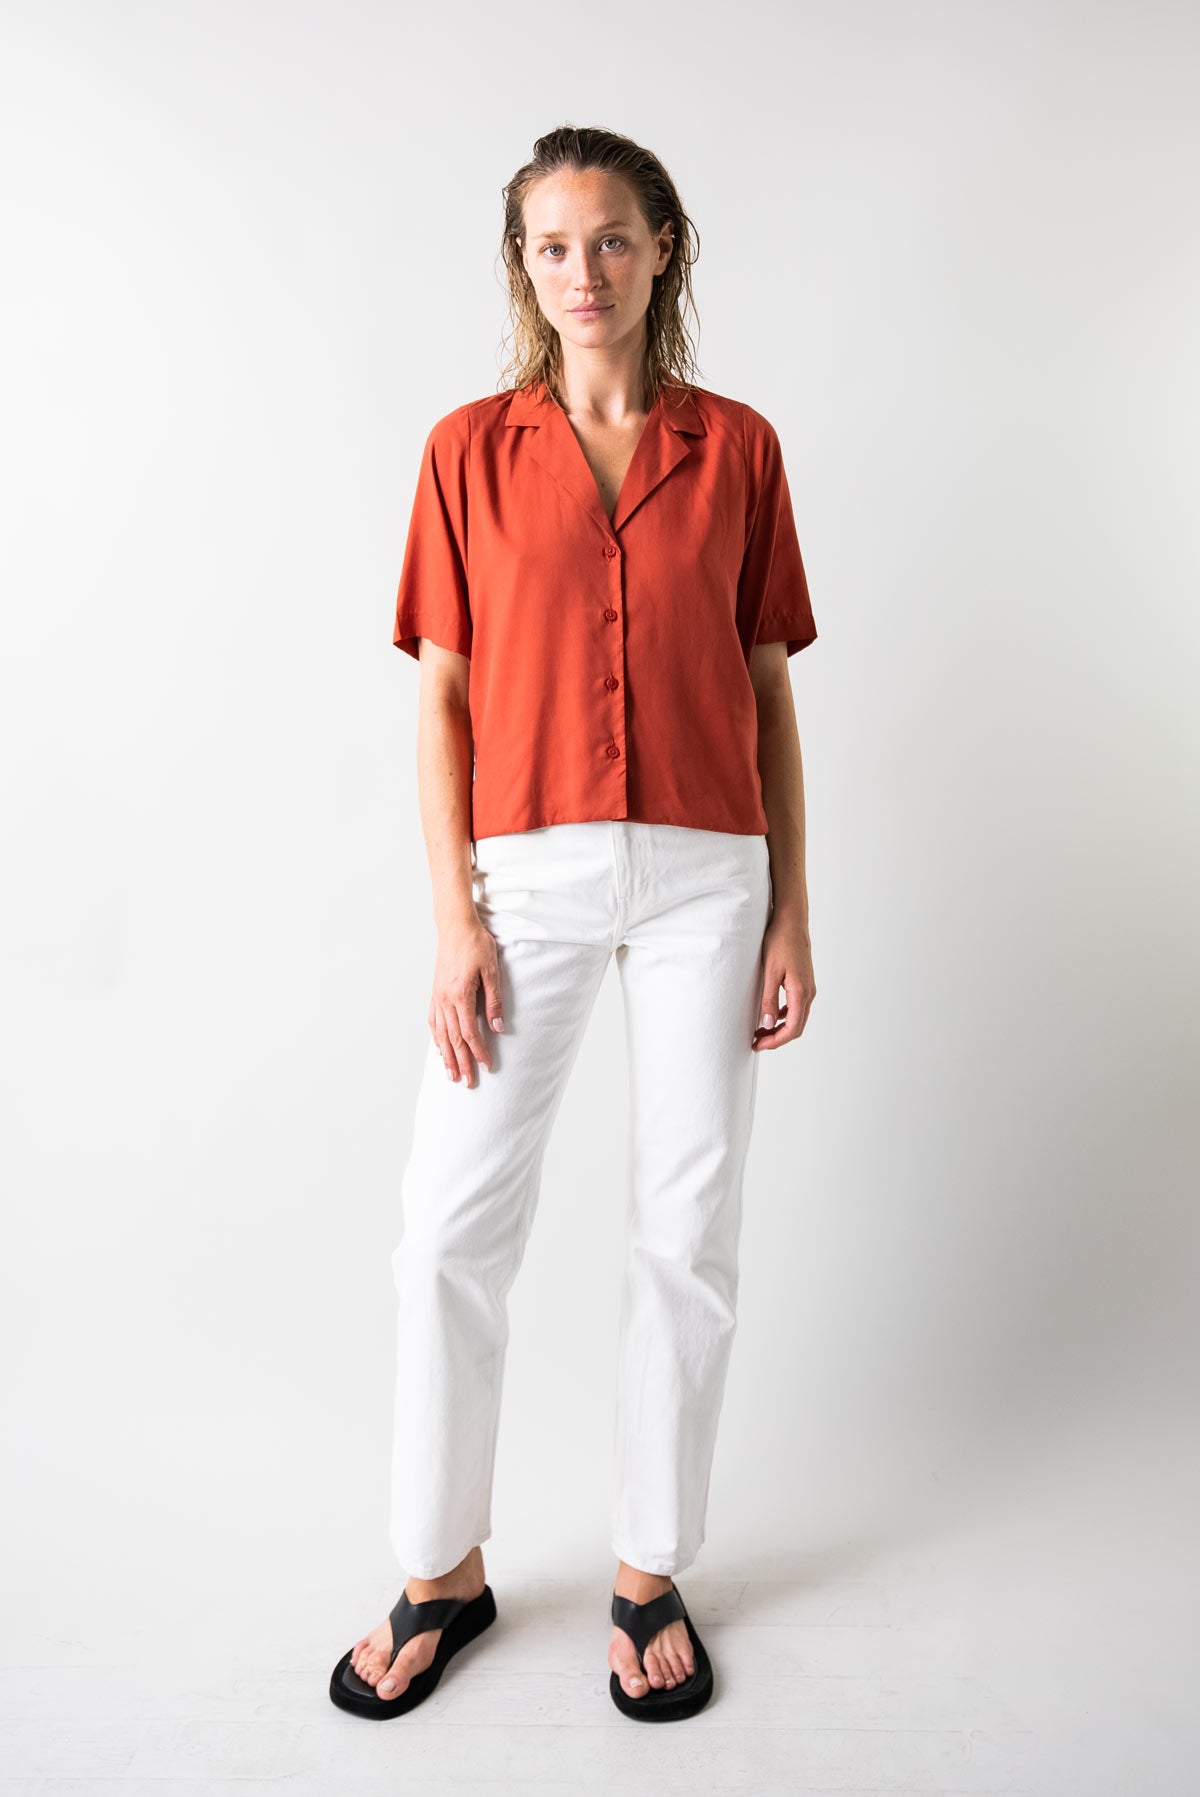 J. Jill Women's Dark Red Lux Tencel Terry Asymmetrical Shirt Top